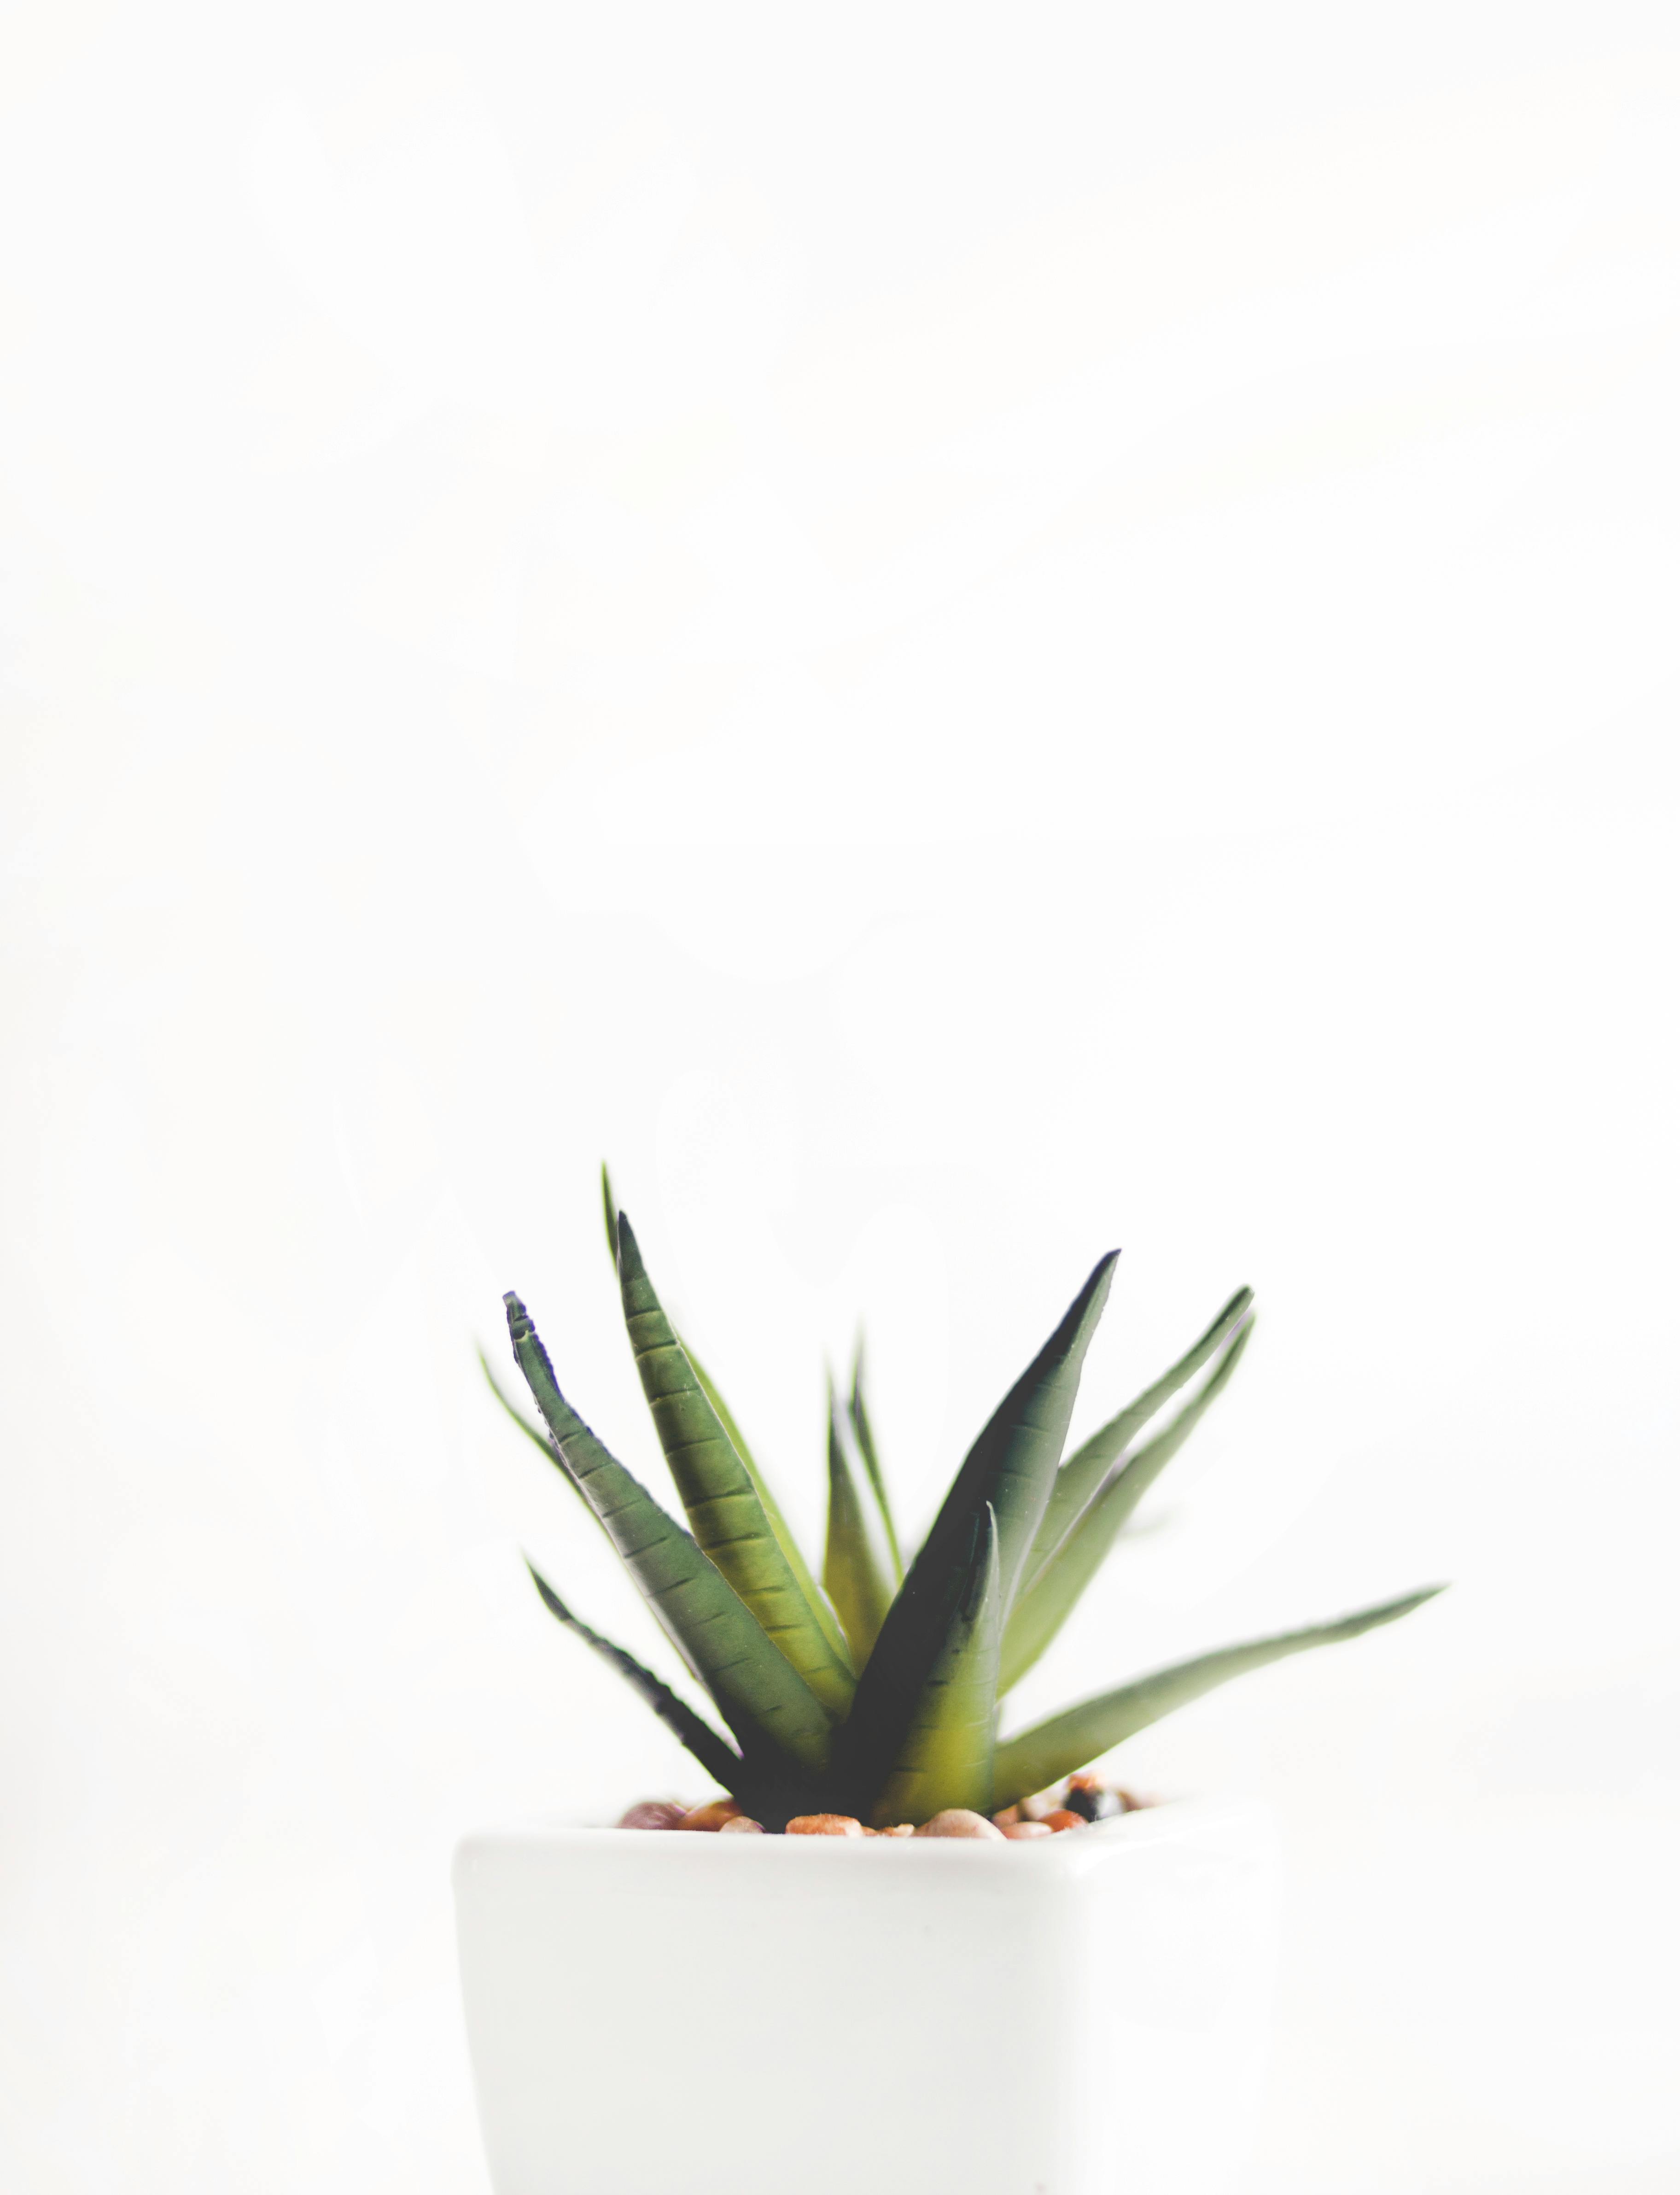 Free stock photo of minimalism minimalist plant